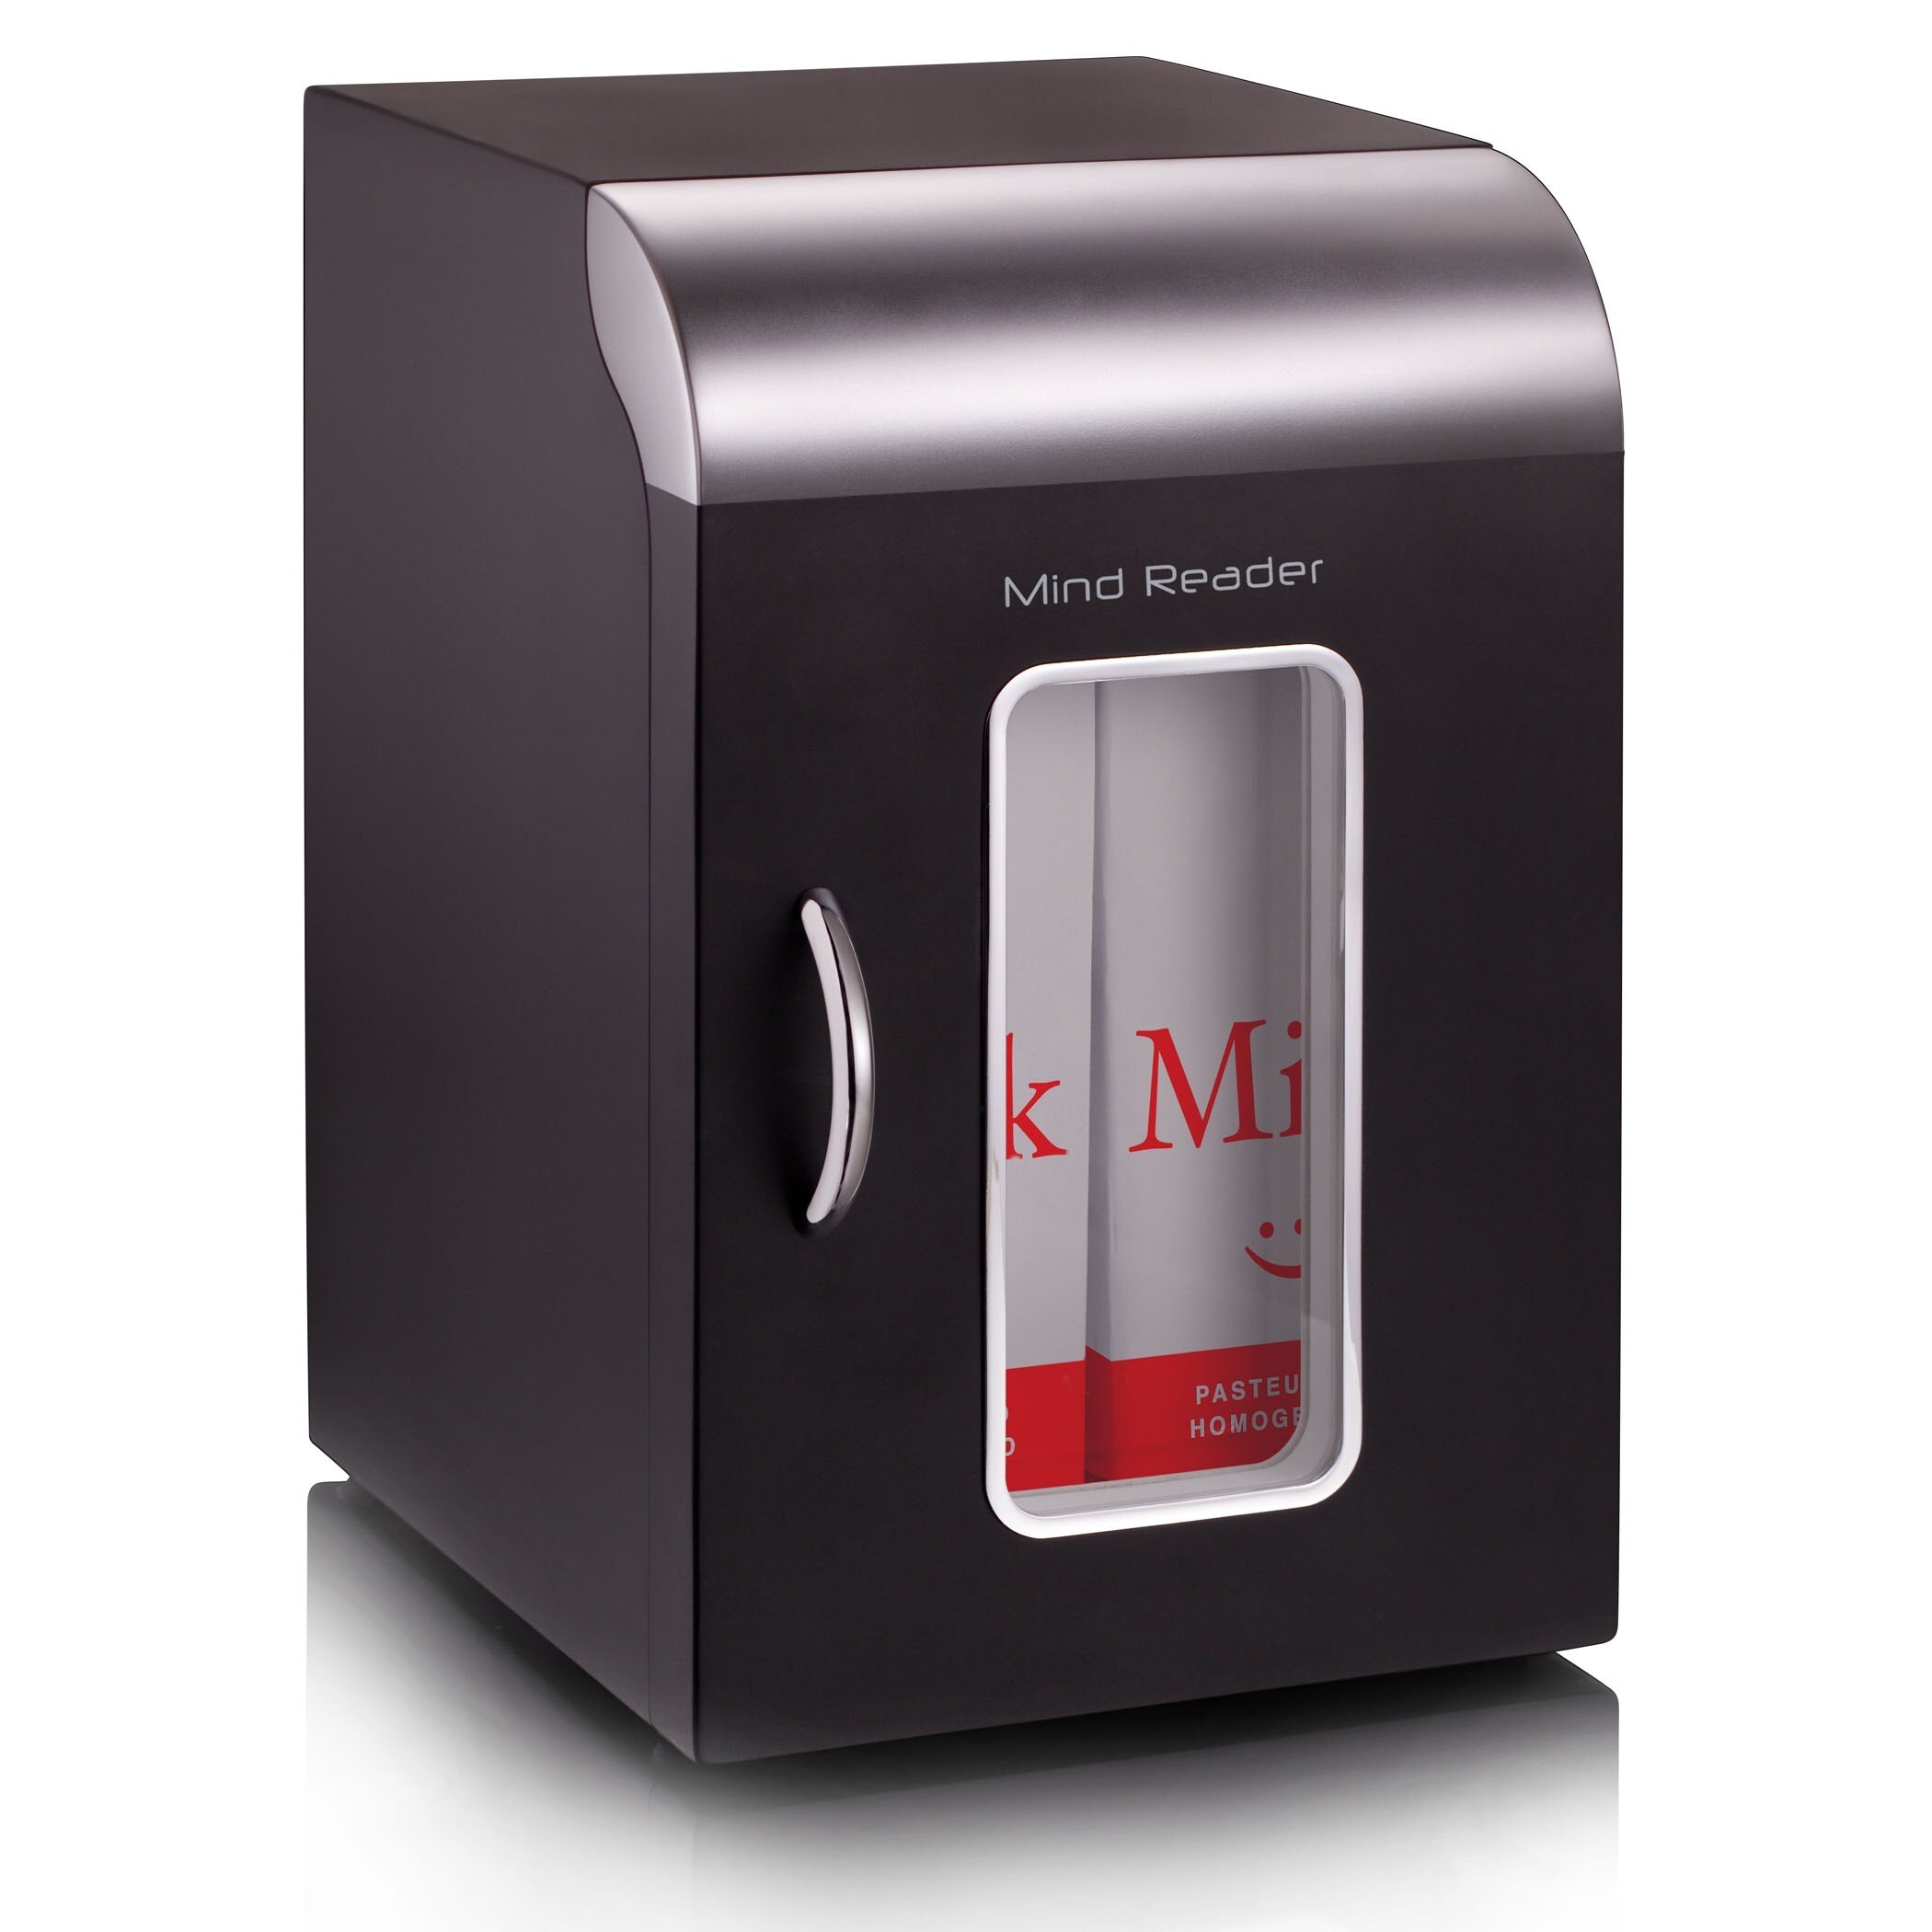 https://ak1.ostkcdn.com/images/products/7516729/Mind-Reader-The-Cube-2-quart-Refrigerator-315317f5-ec89-4008-ae99-8681c0ee983e.jpg